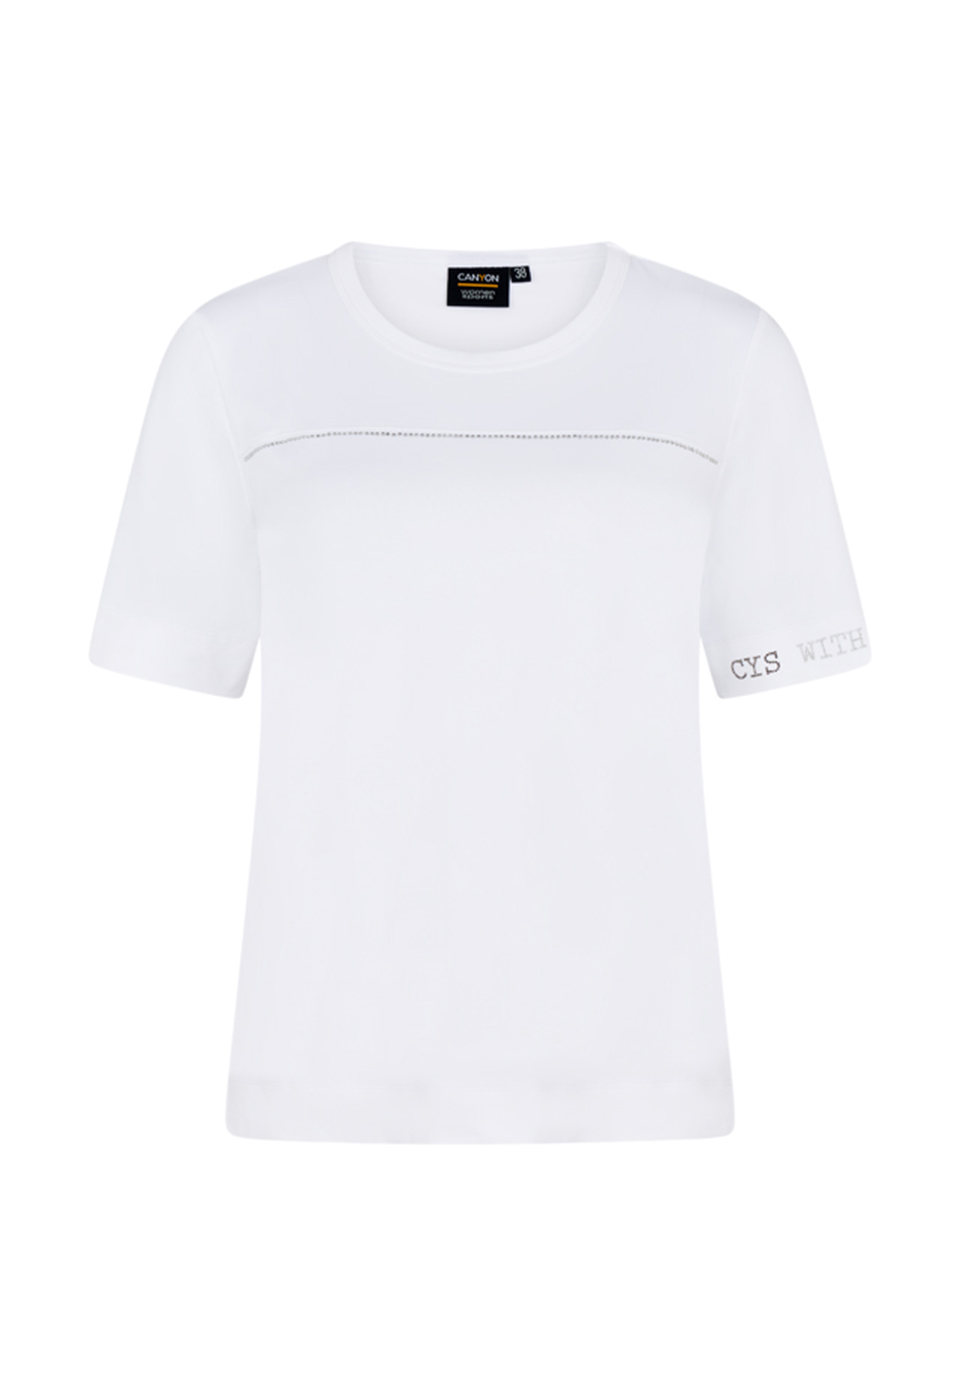 CANYON Damen Funktions T-Shirt 1/2 Arm 607002 weiß